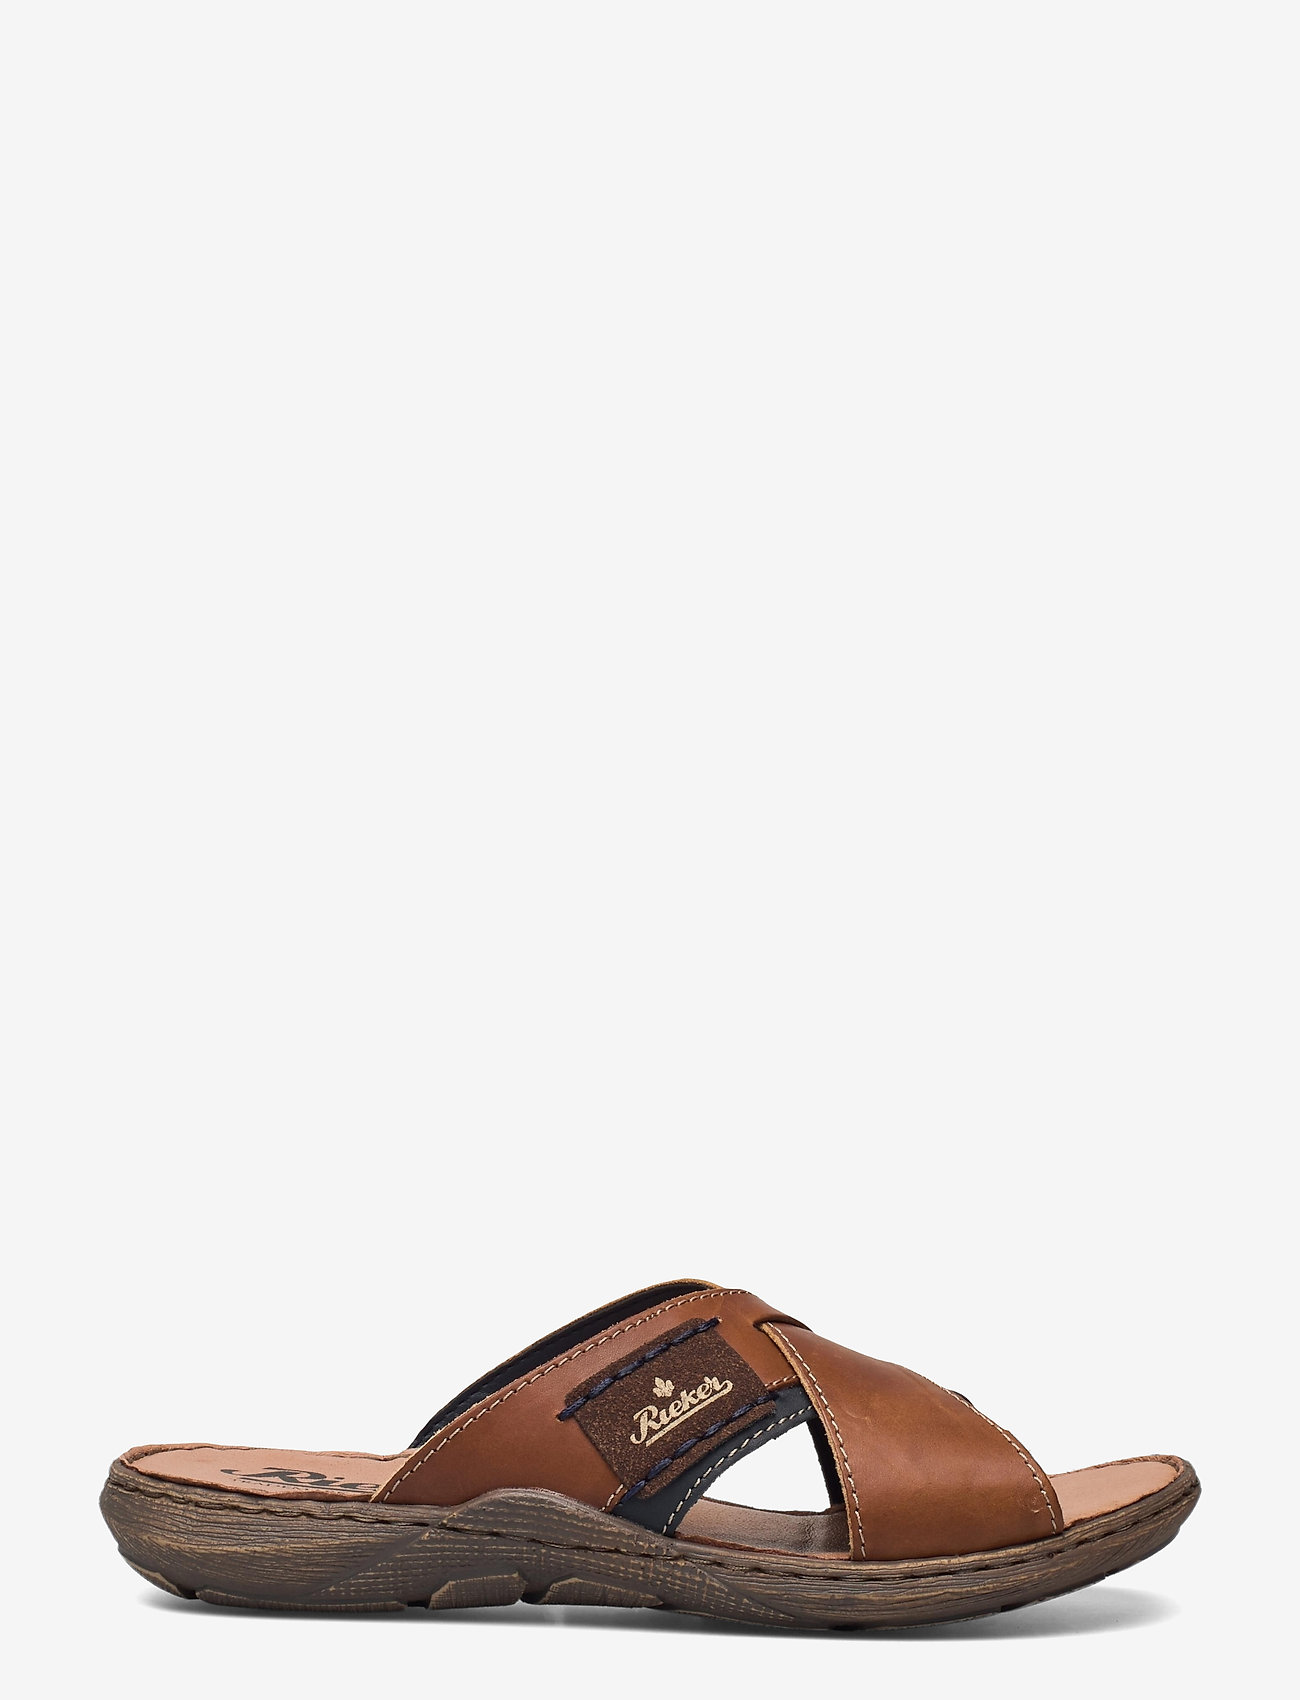 Rieker - 22099-25 - sandals - brown combination - 1